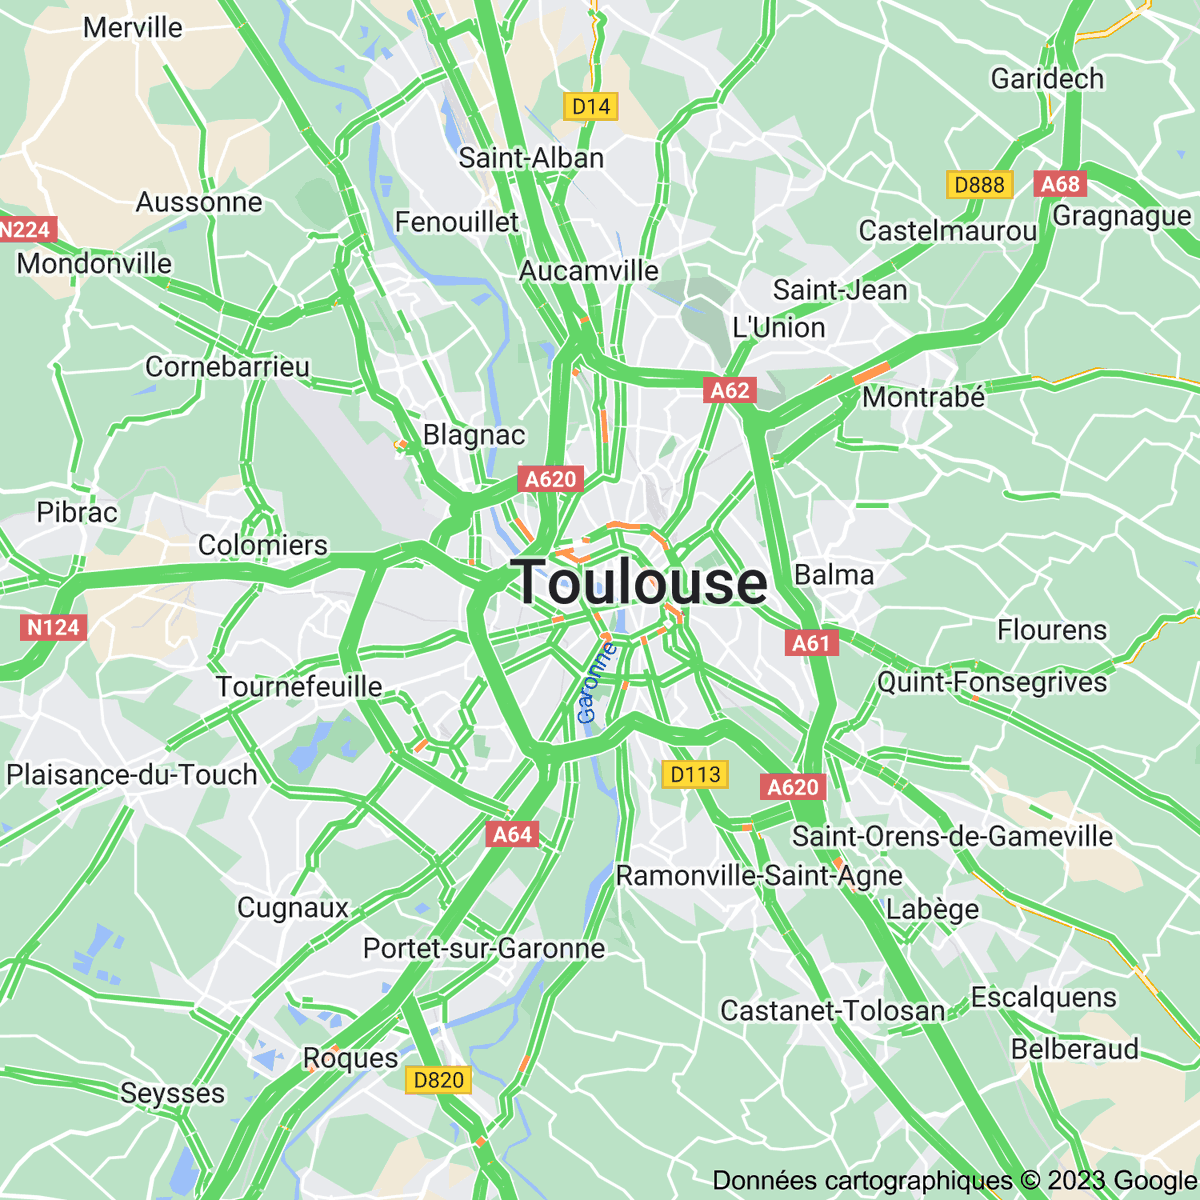 [FLASH 23:30] Trafic à Toulouse toulousetrafic.com #Toulouse #ToulousePeriph #InfoTrafic